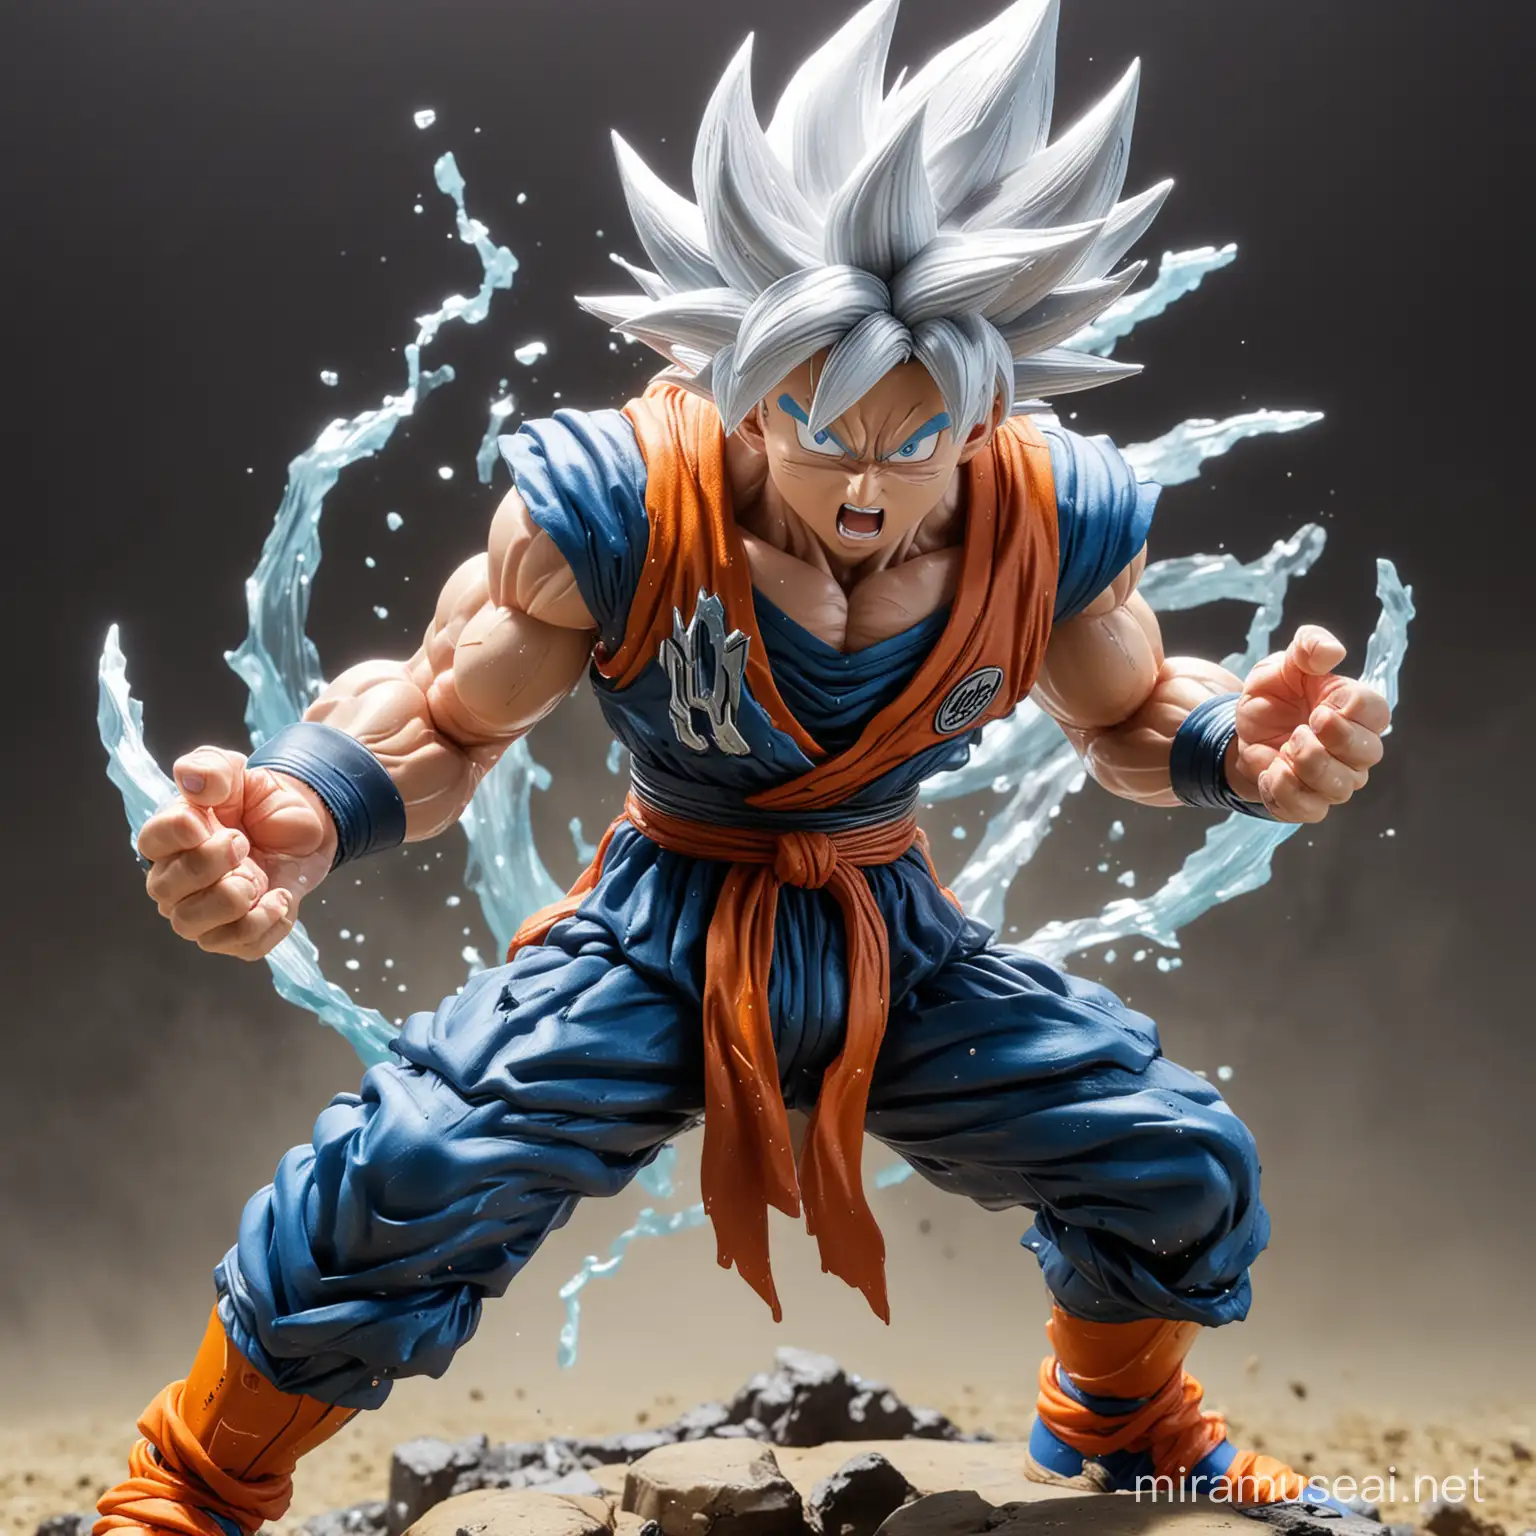 Goku in ultra Pro instinct mechanical God level mode showing his full strength in battlefield